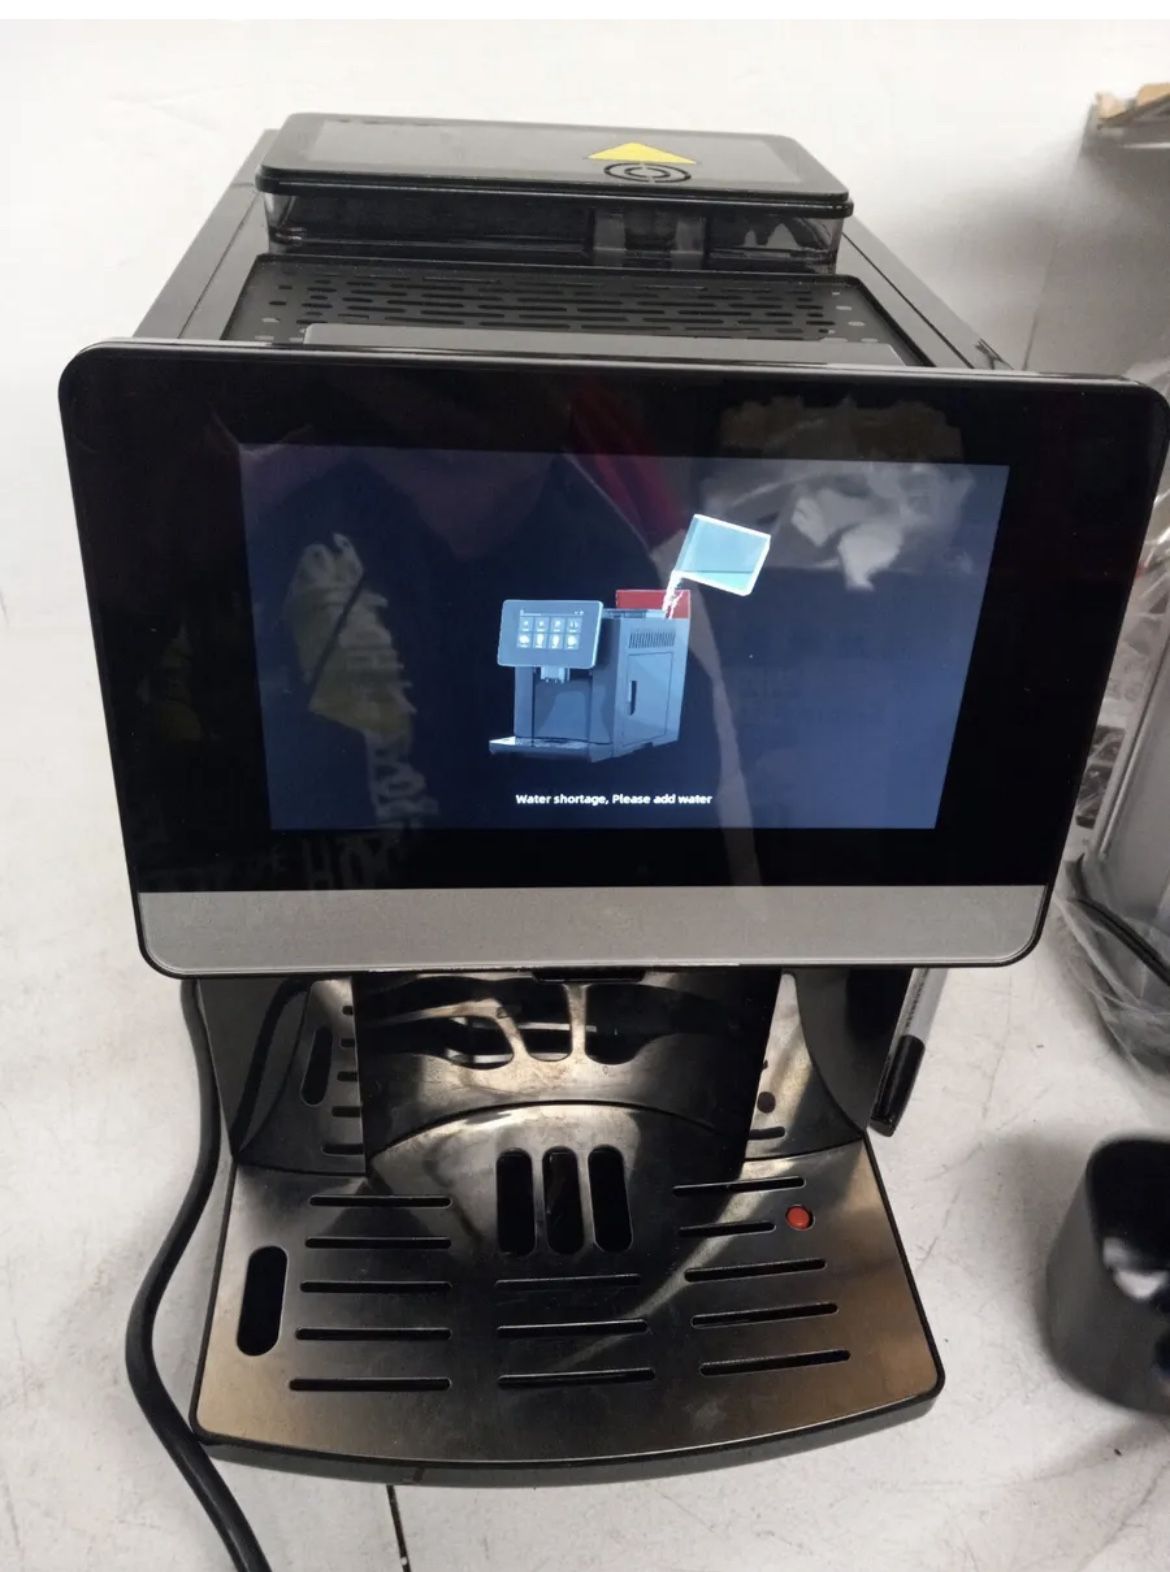 Zulay Magia Super Automatic Coffee Espresso Machine - Durable Automatic  Espresso for Sale in Irwindale, CA - OfferUp